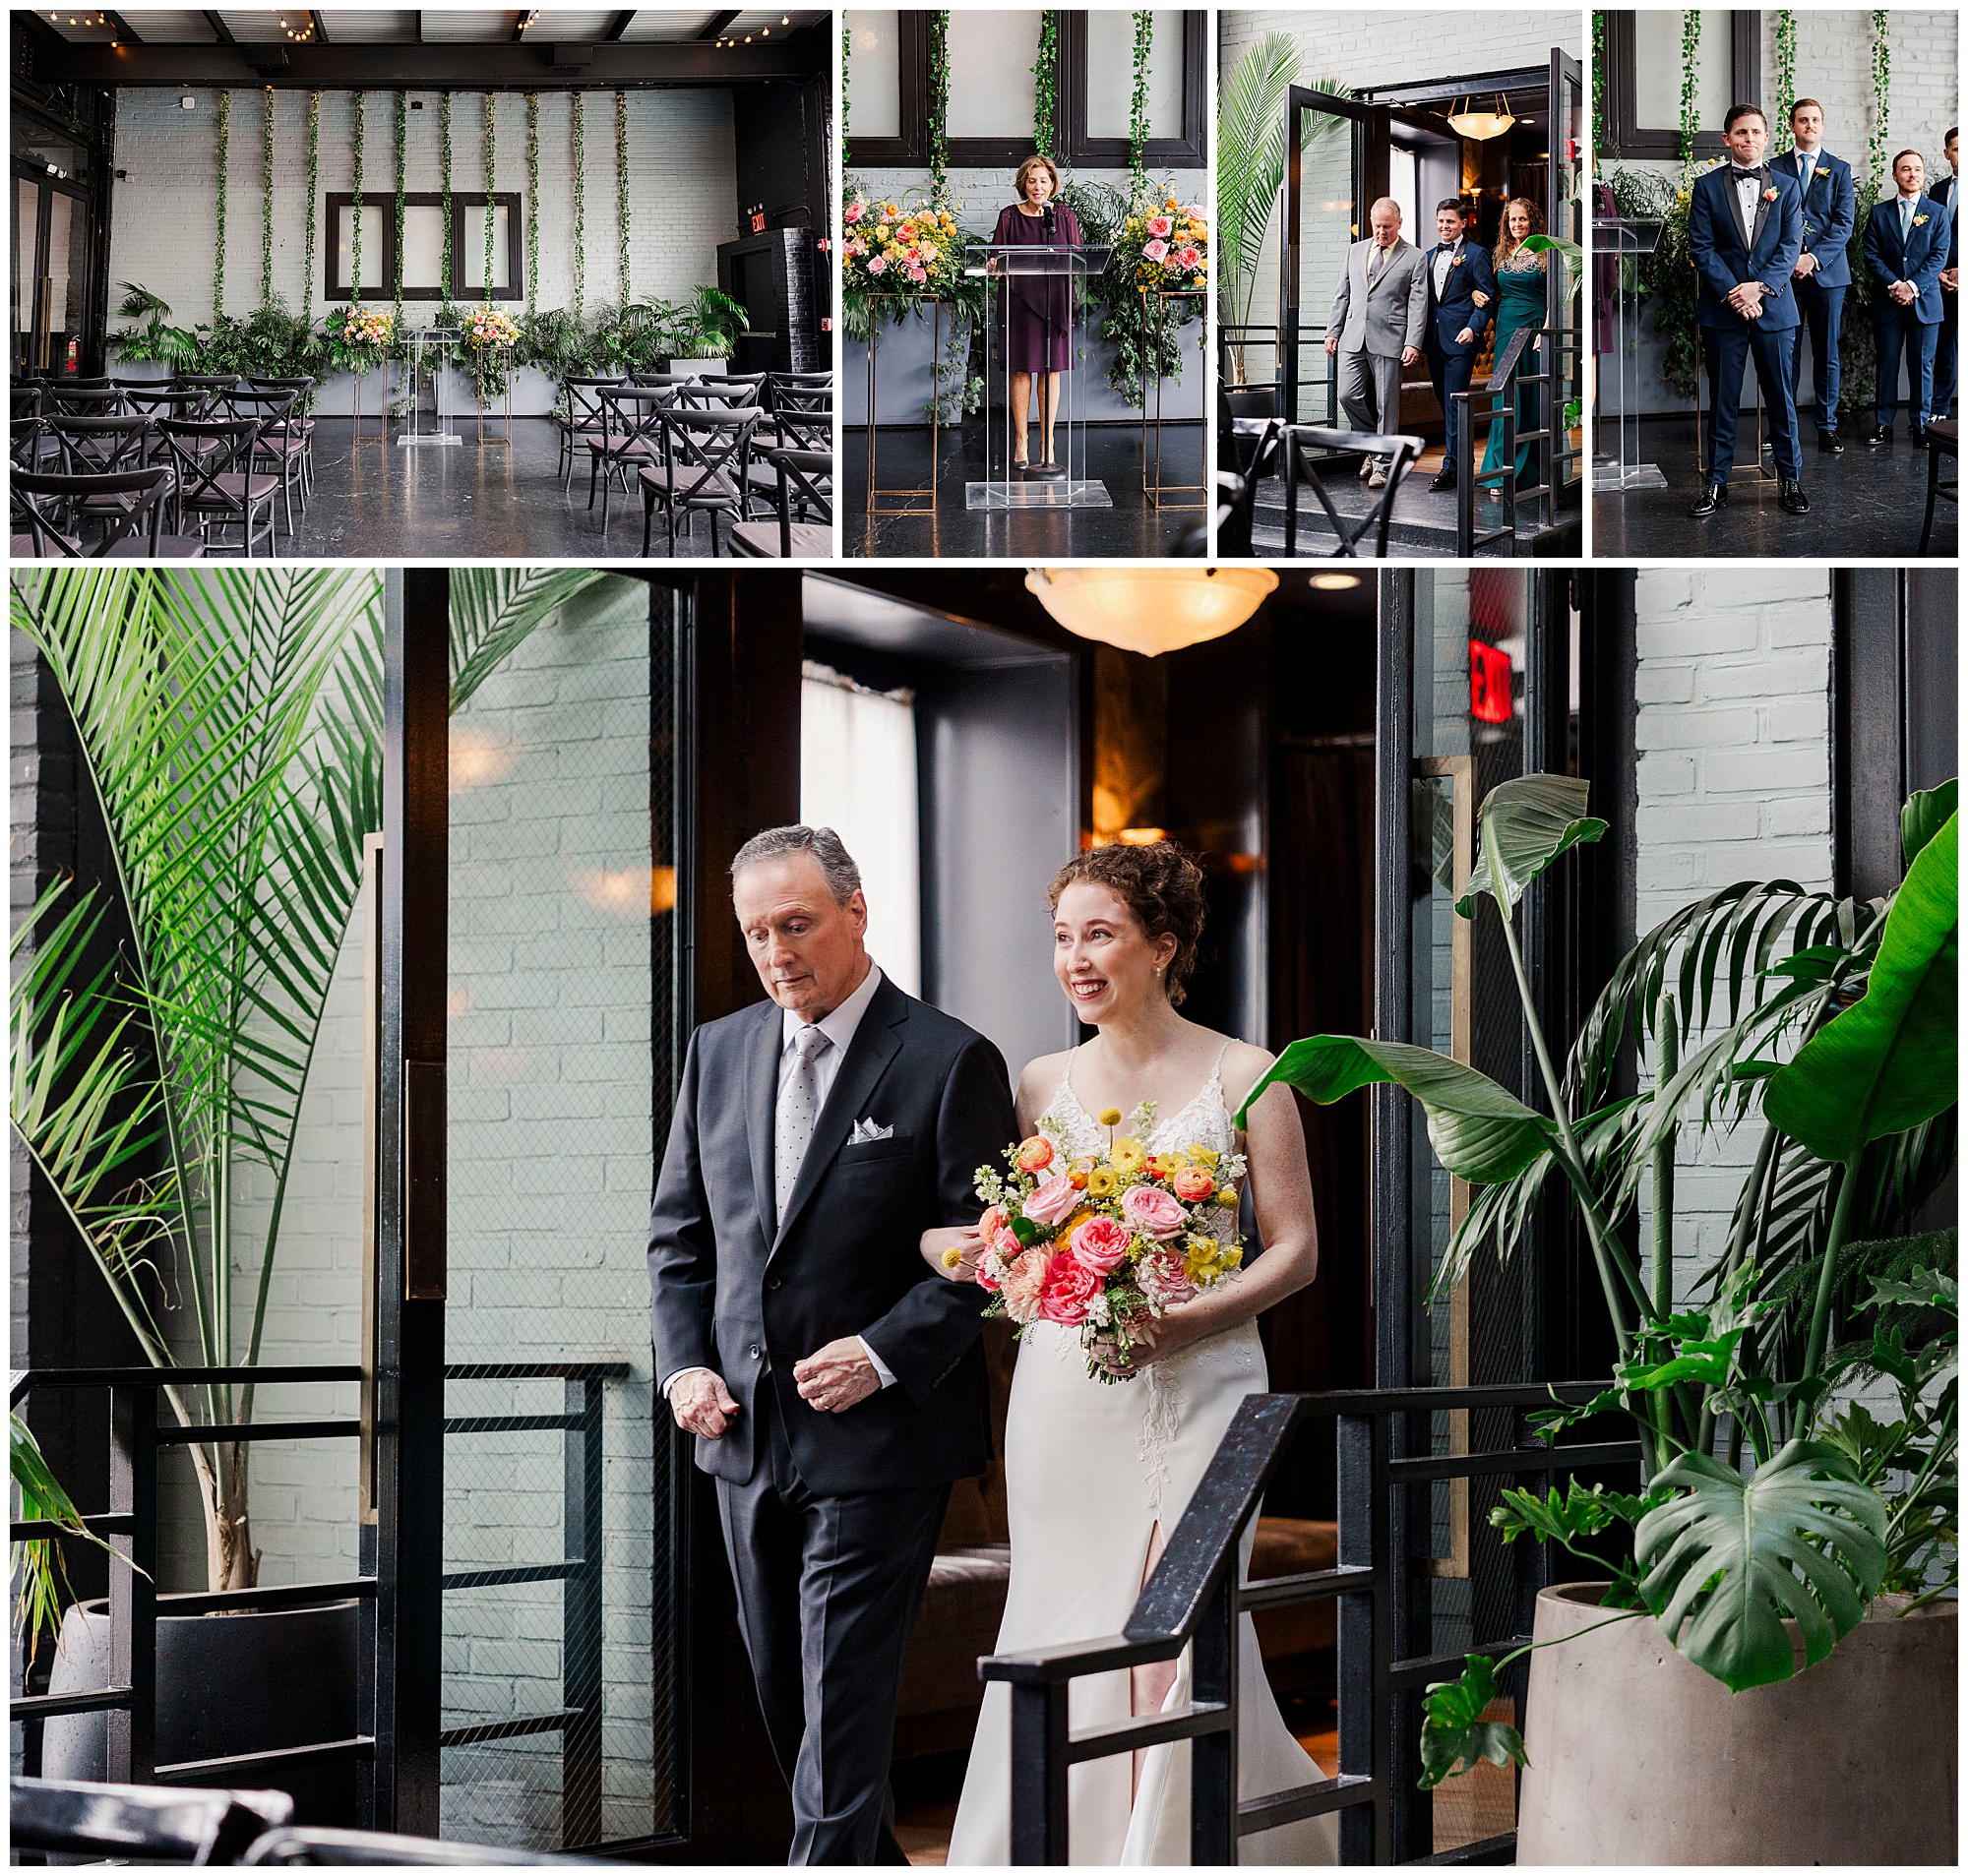 Intimate wedding photos at royal palms shuffleboard in brooklyn